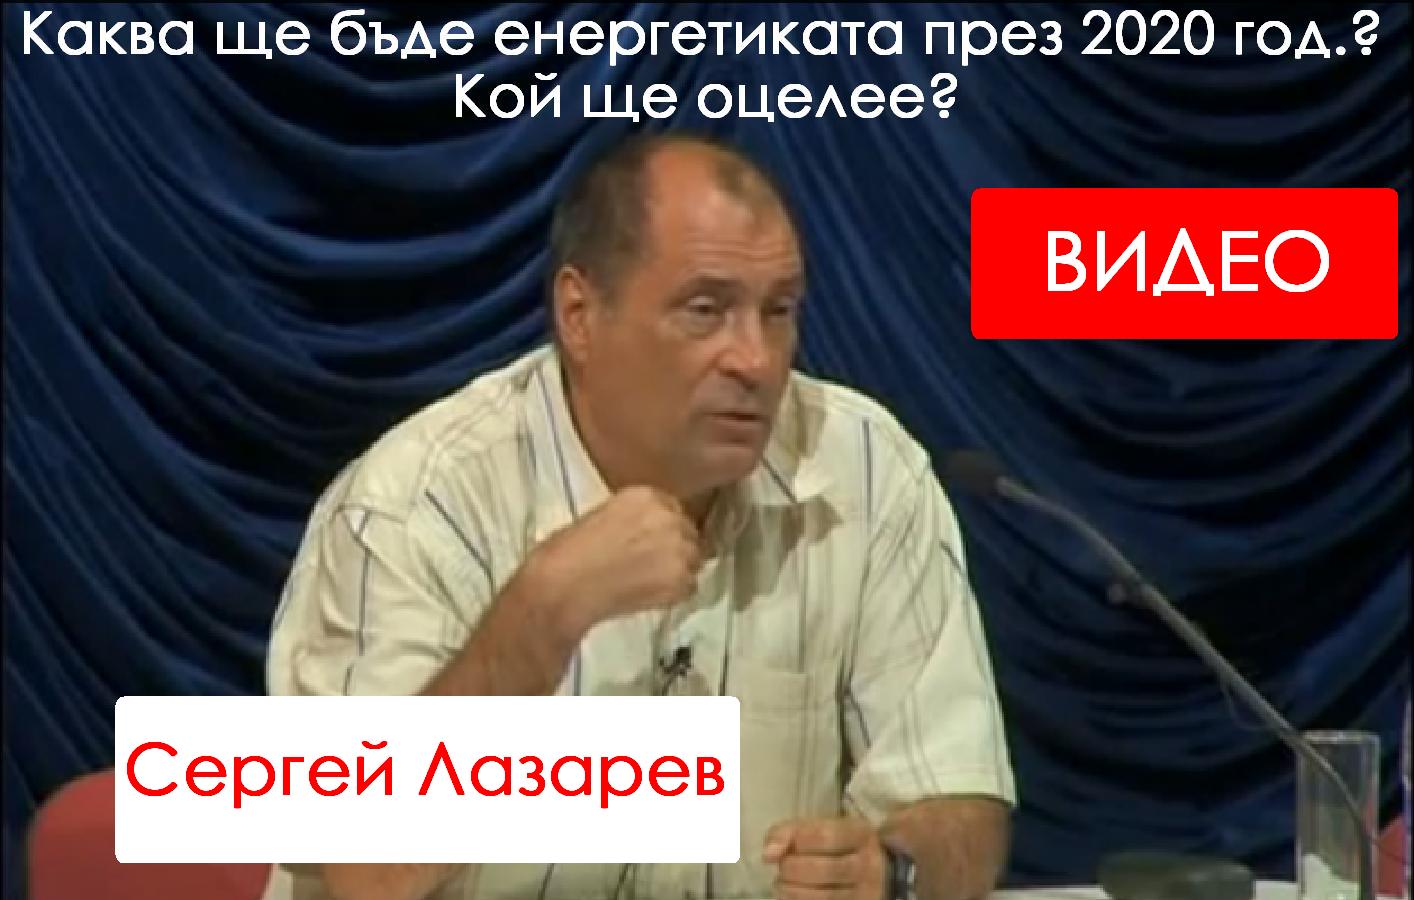 Сергей Лазарев видео енергетика 2020 година Sergei Lazarev video